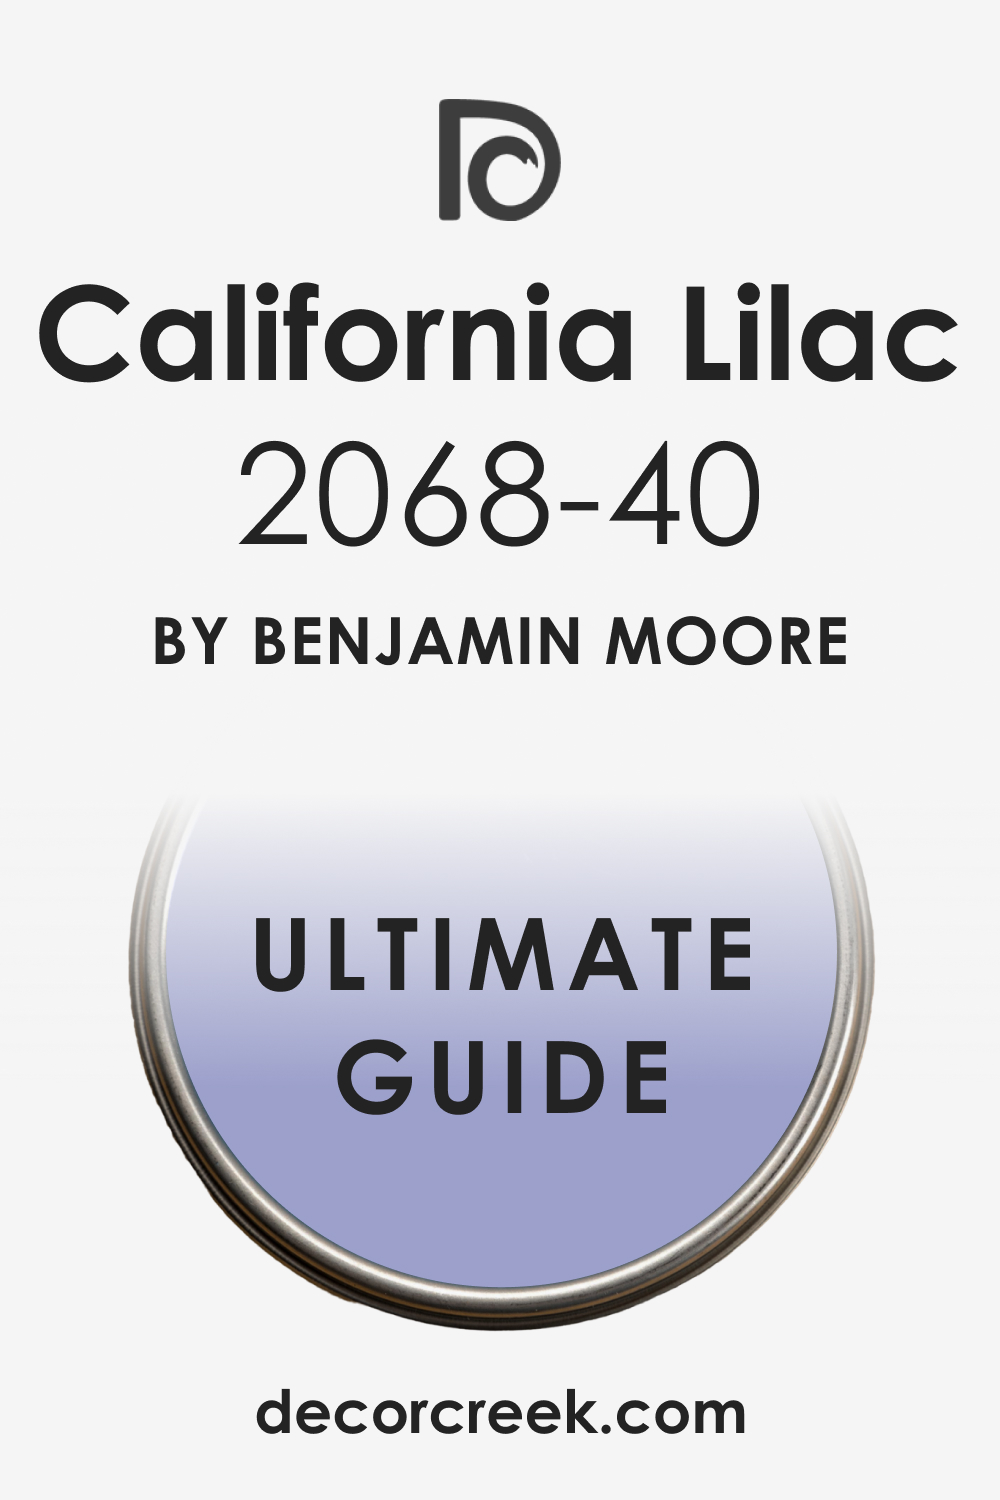 Ultimate Guide of California Lilac 2068-40 